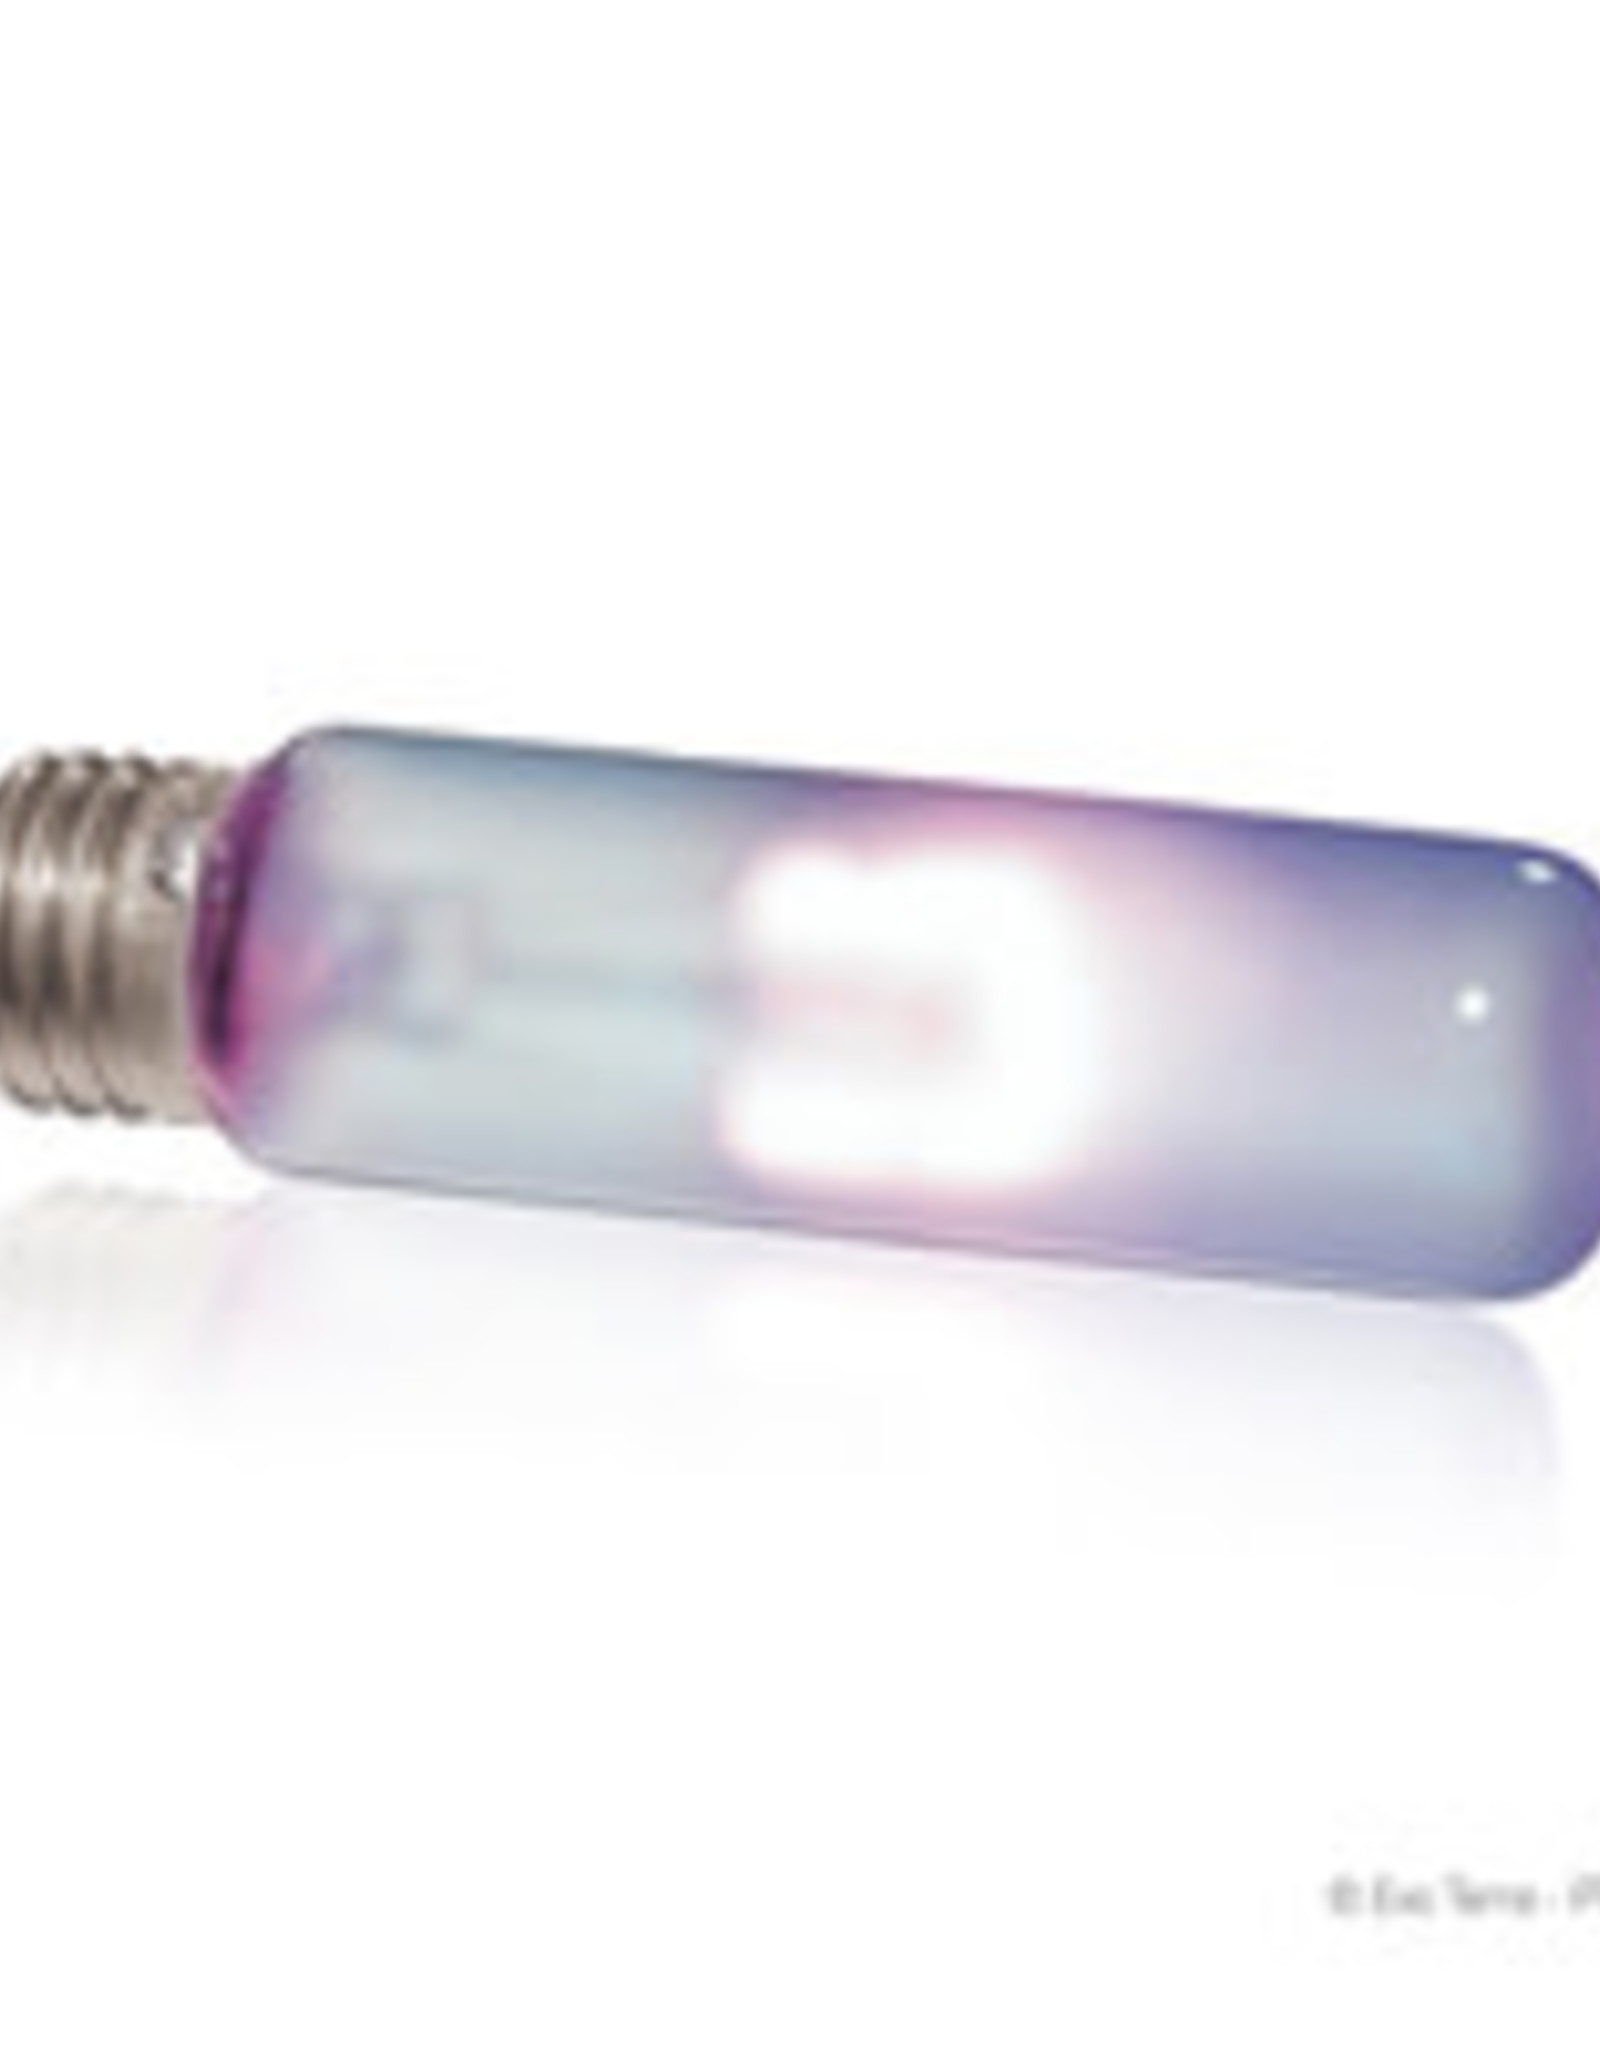 EXO TERRA EXO TERRA- PT2104- BROAD-SPECTRUM DAYLIGHT LAMP/BULB (IDEAL FOR PLANTS /BREEDING) WITH HEAT- 3X3X5- 40W